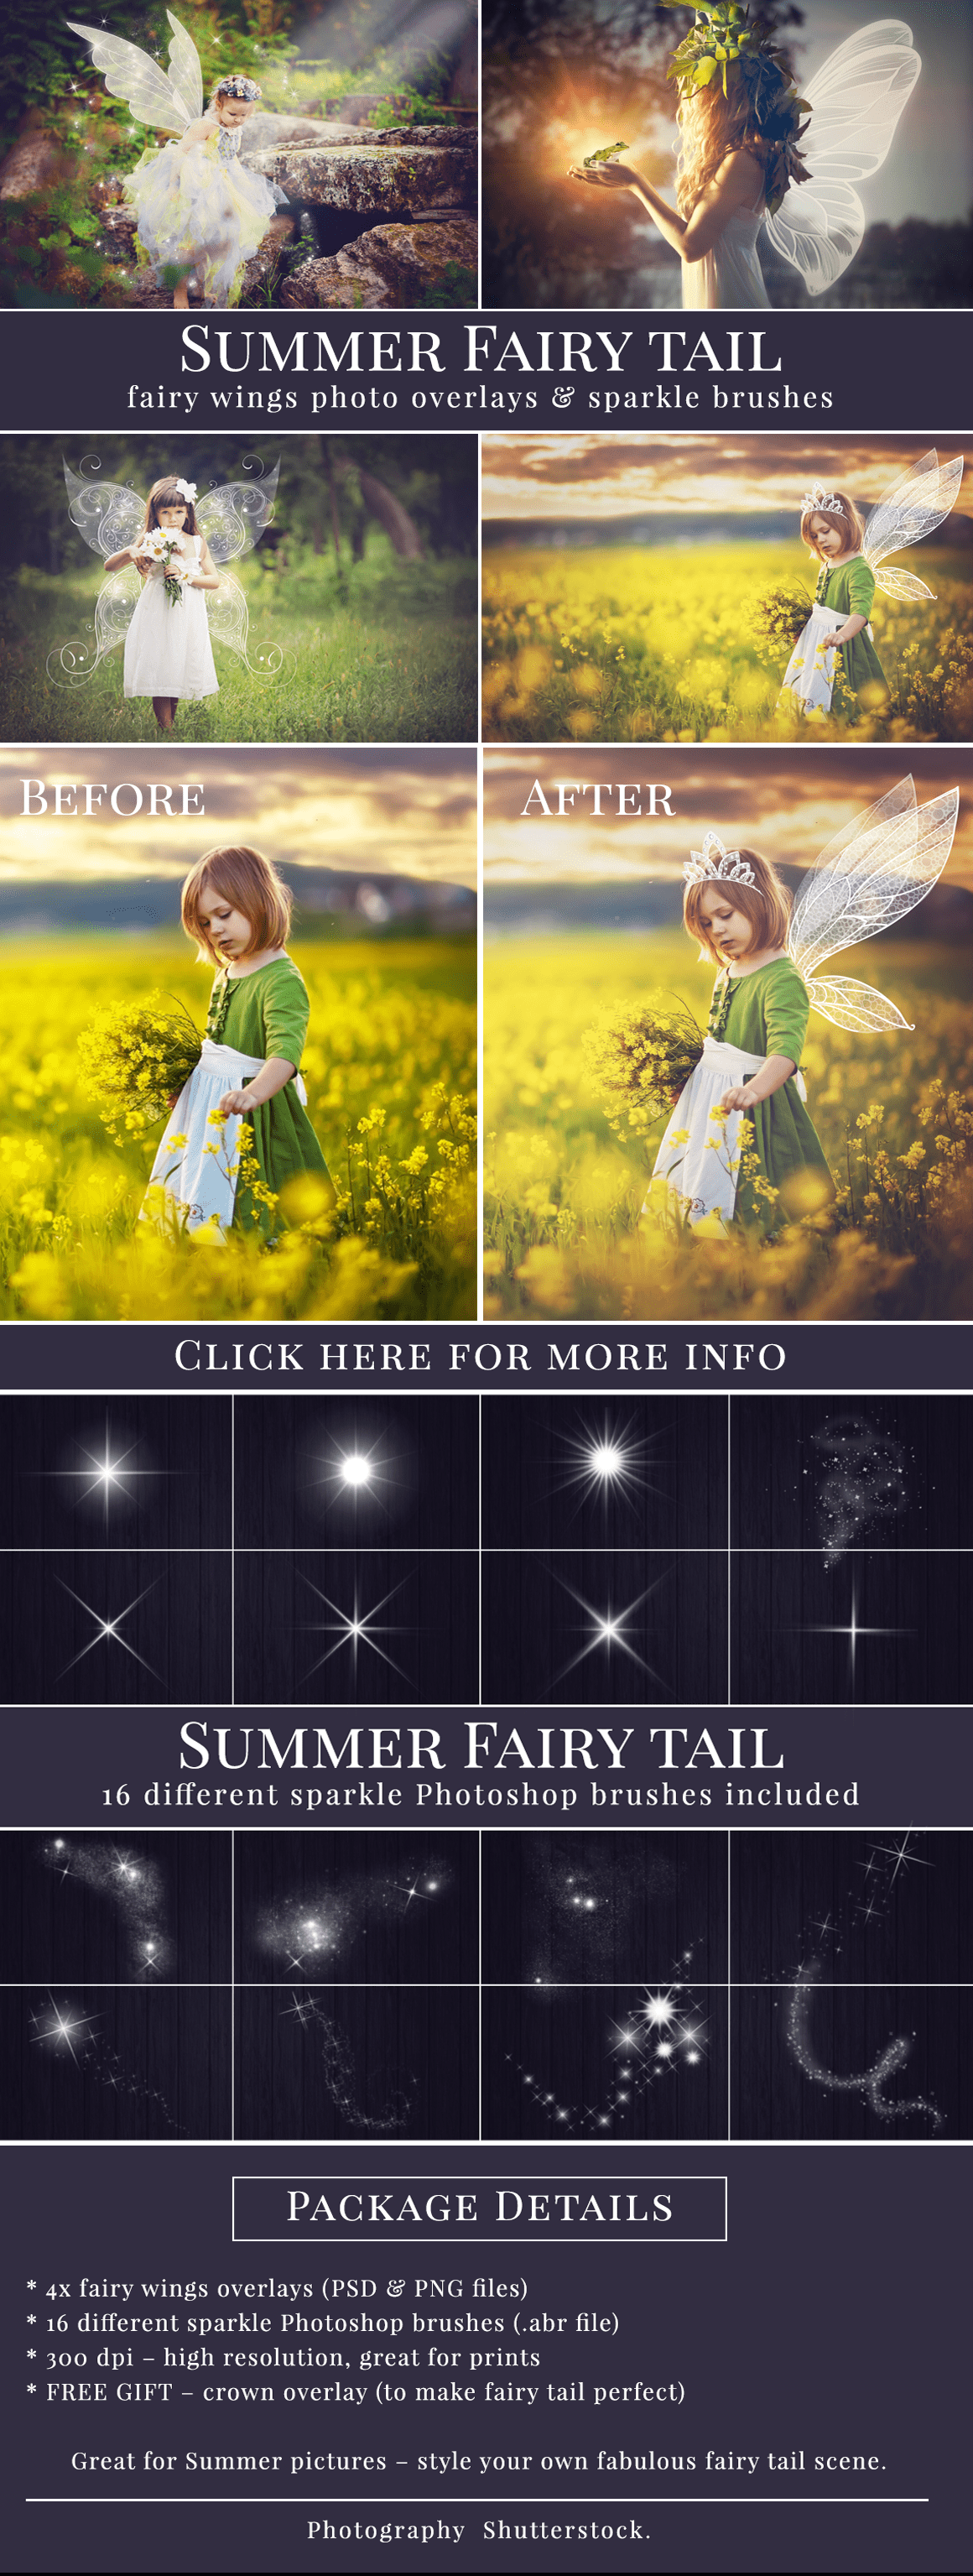 fairy tale photo overlays